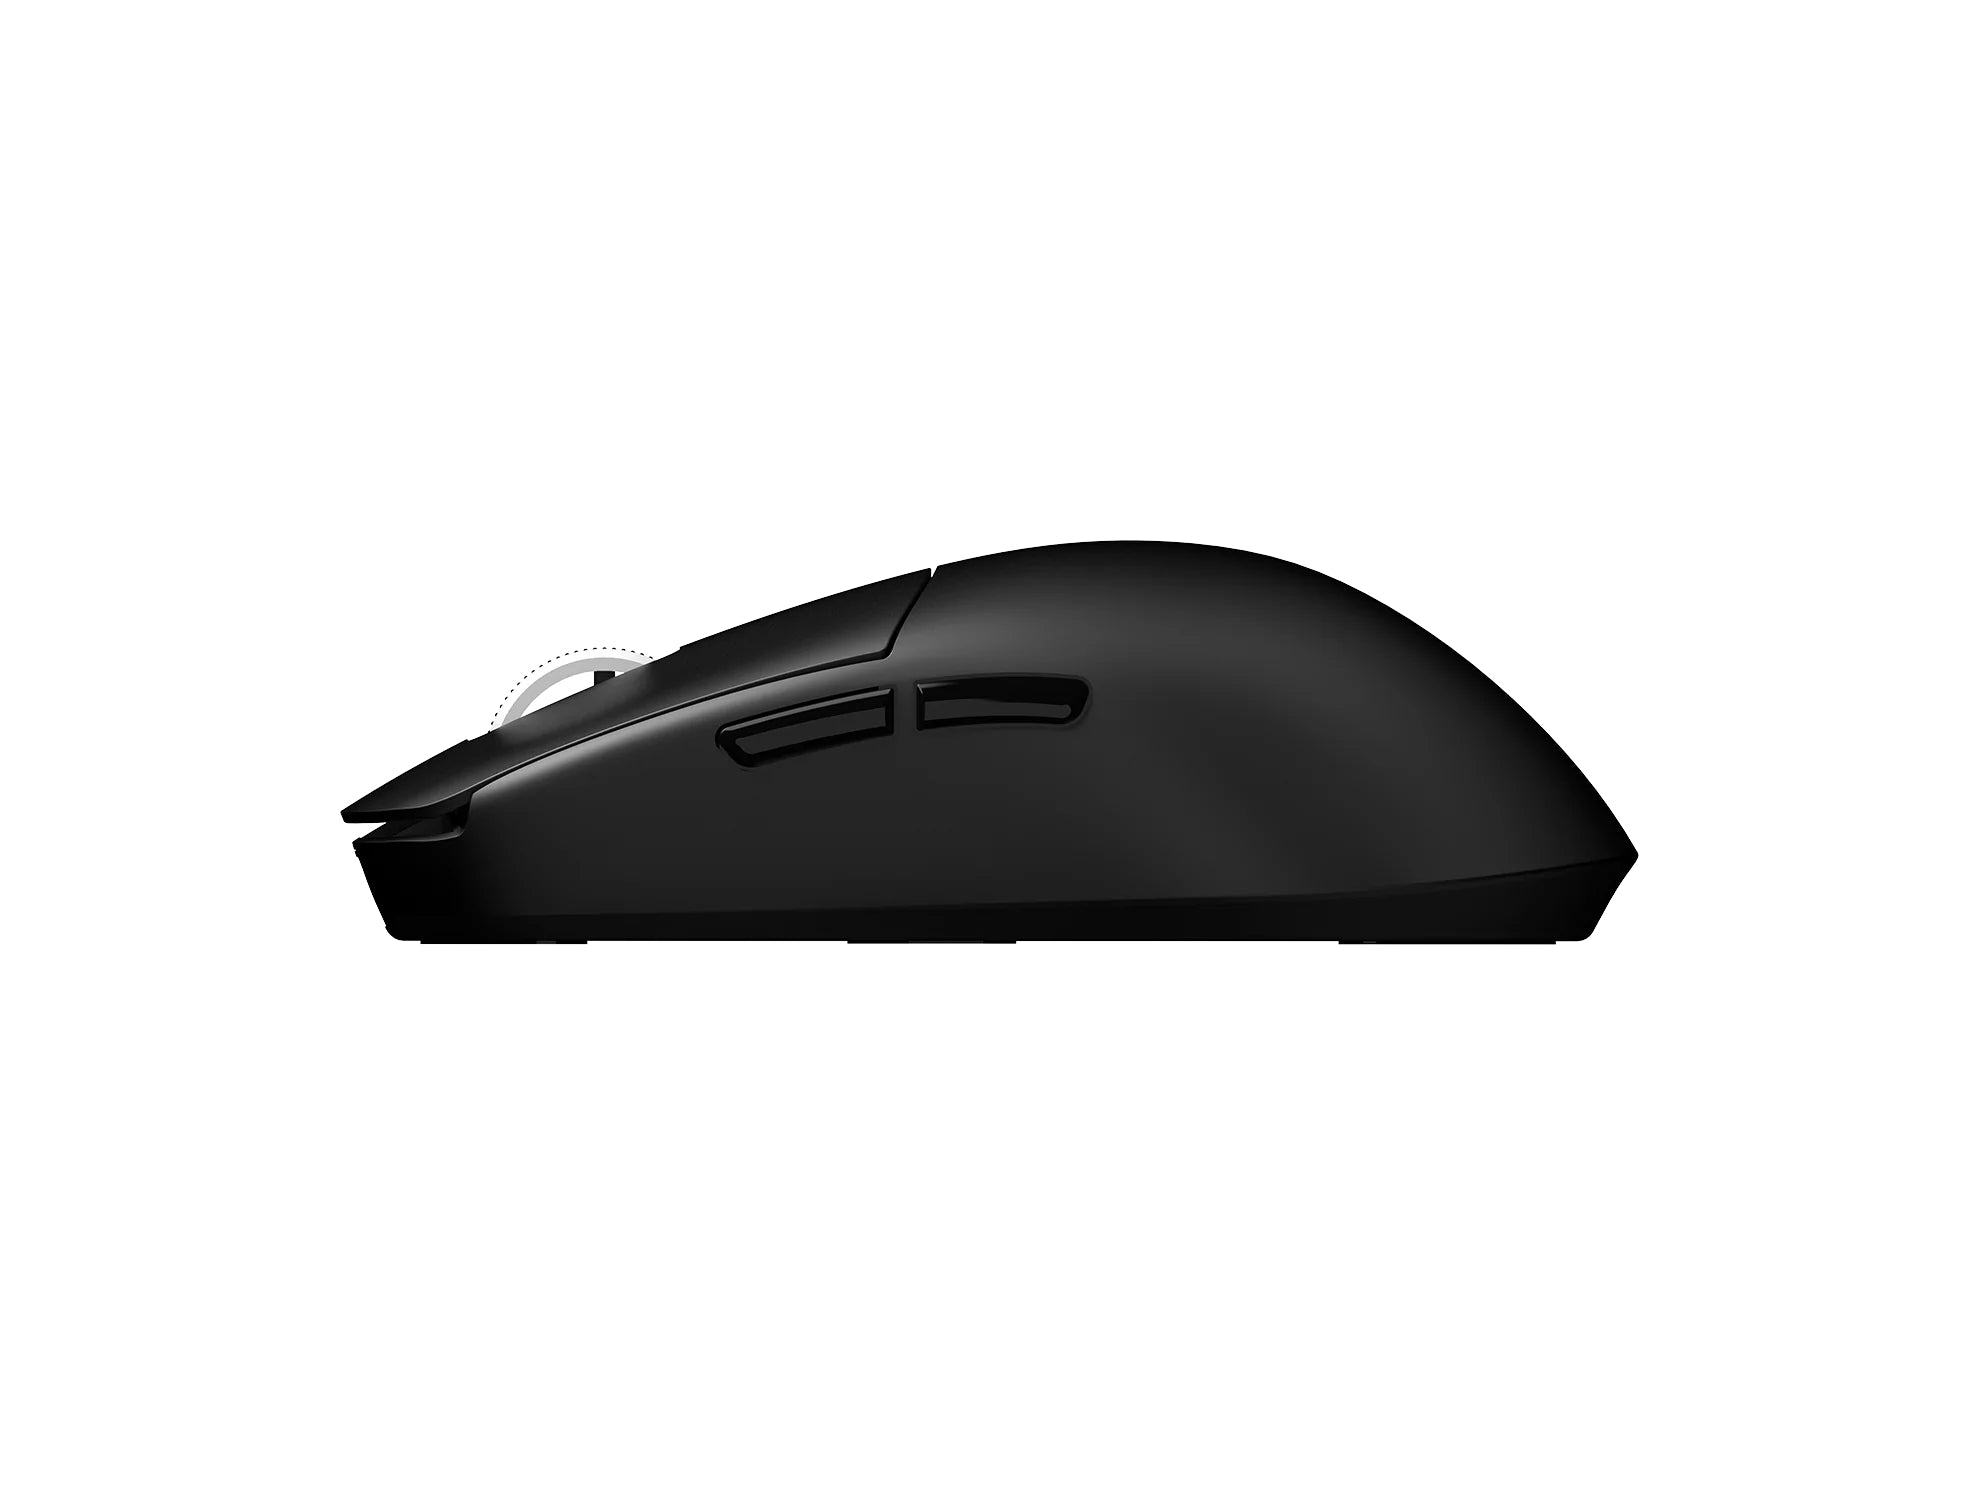 Ninjutso Sora Wireless Gaming Mouse - Black